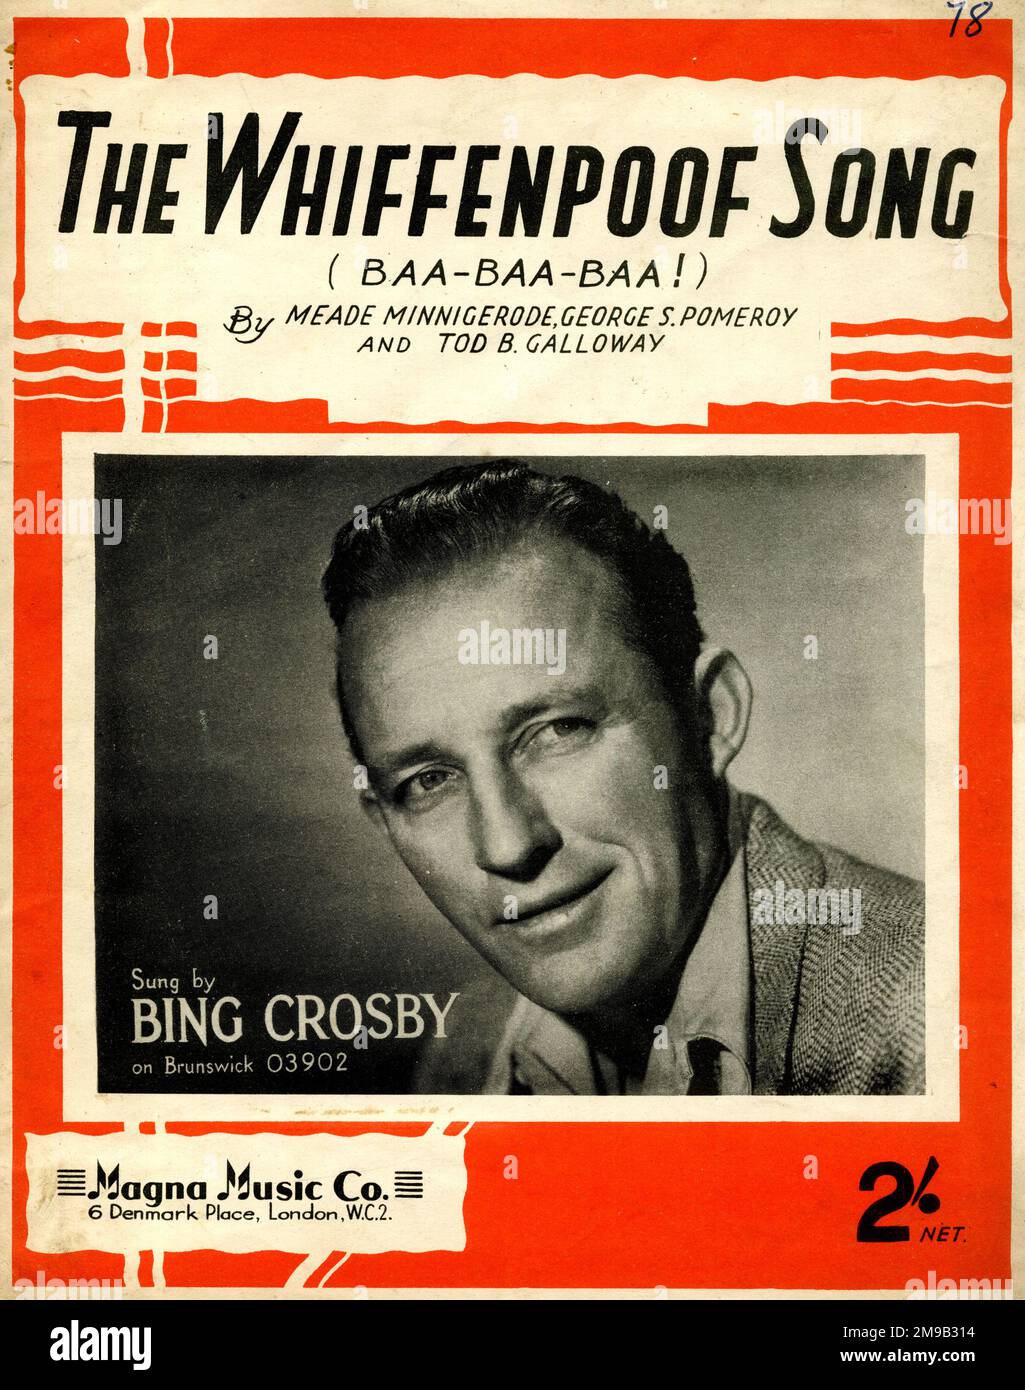 Music cover, The Whiffenpoof Song (Baa-Baa-Baa!), sung by Bing Crosby. Stock Photo